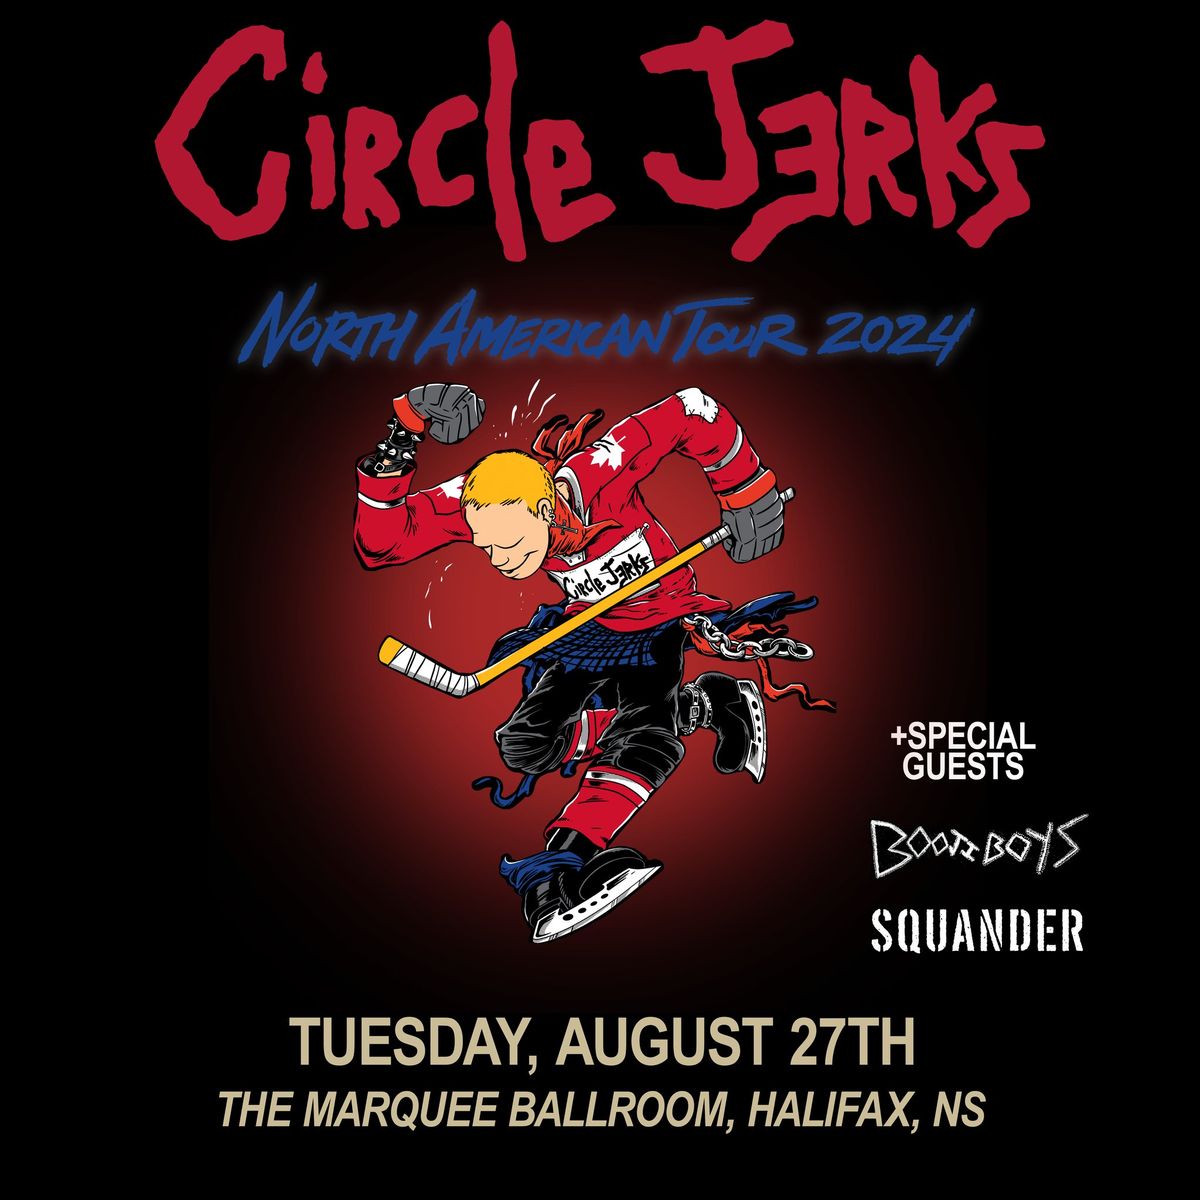 Circle Jerks North American Tour - Halifax